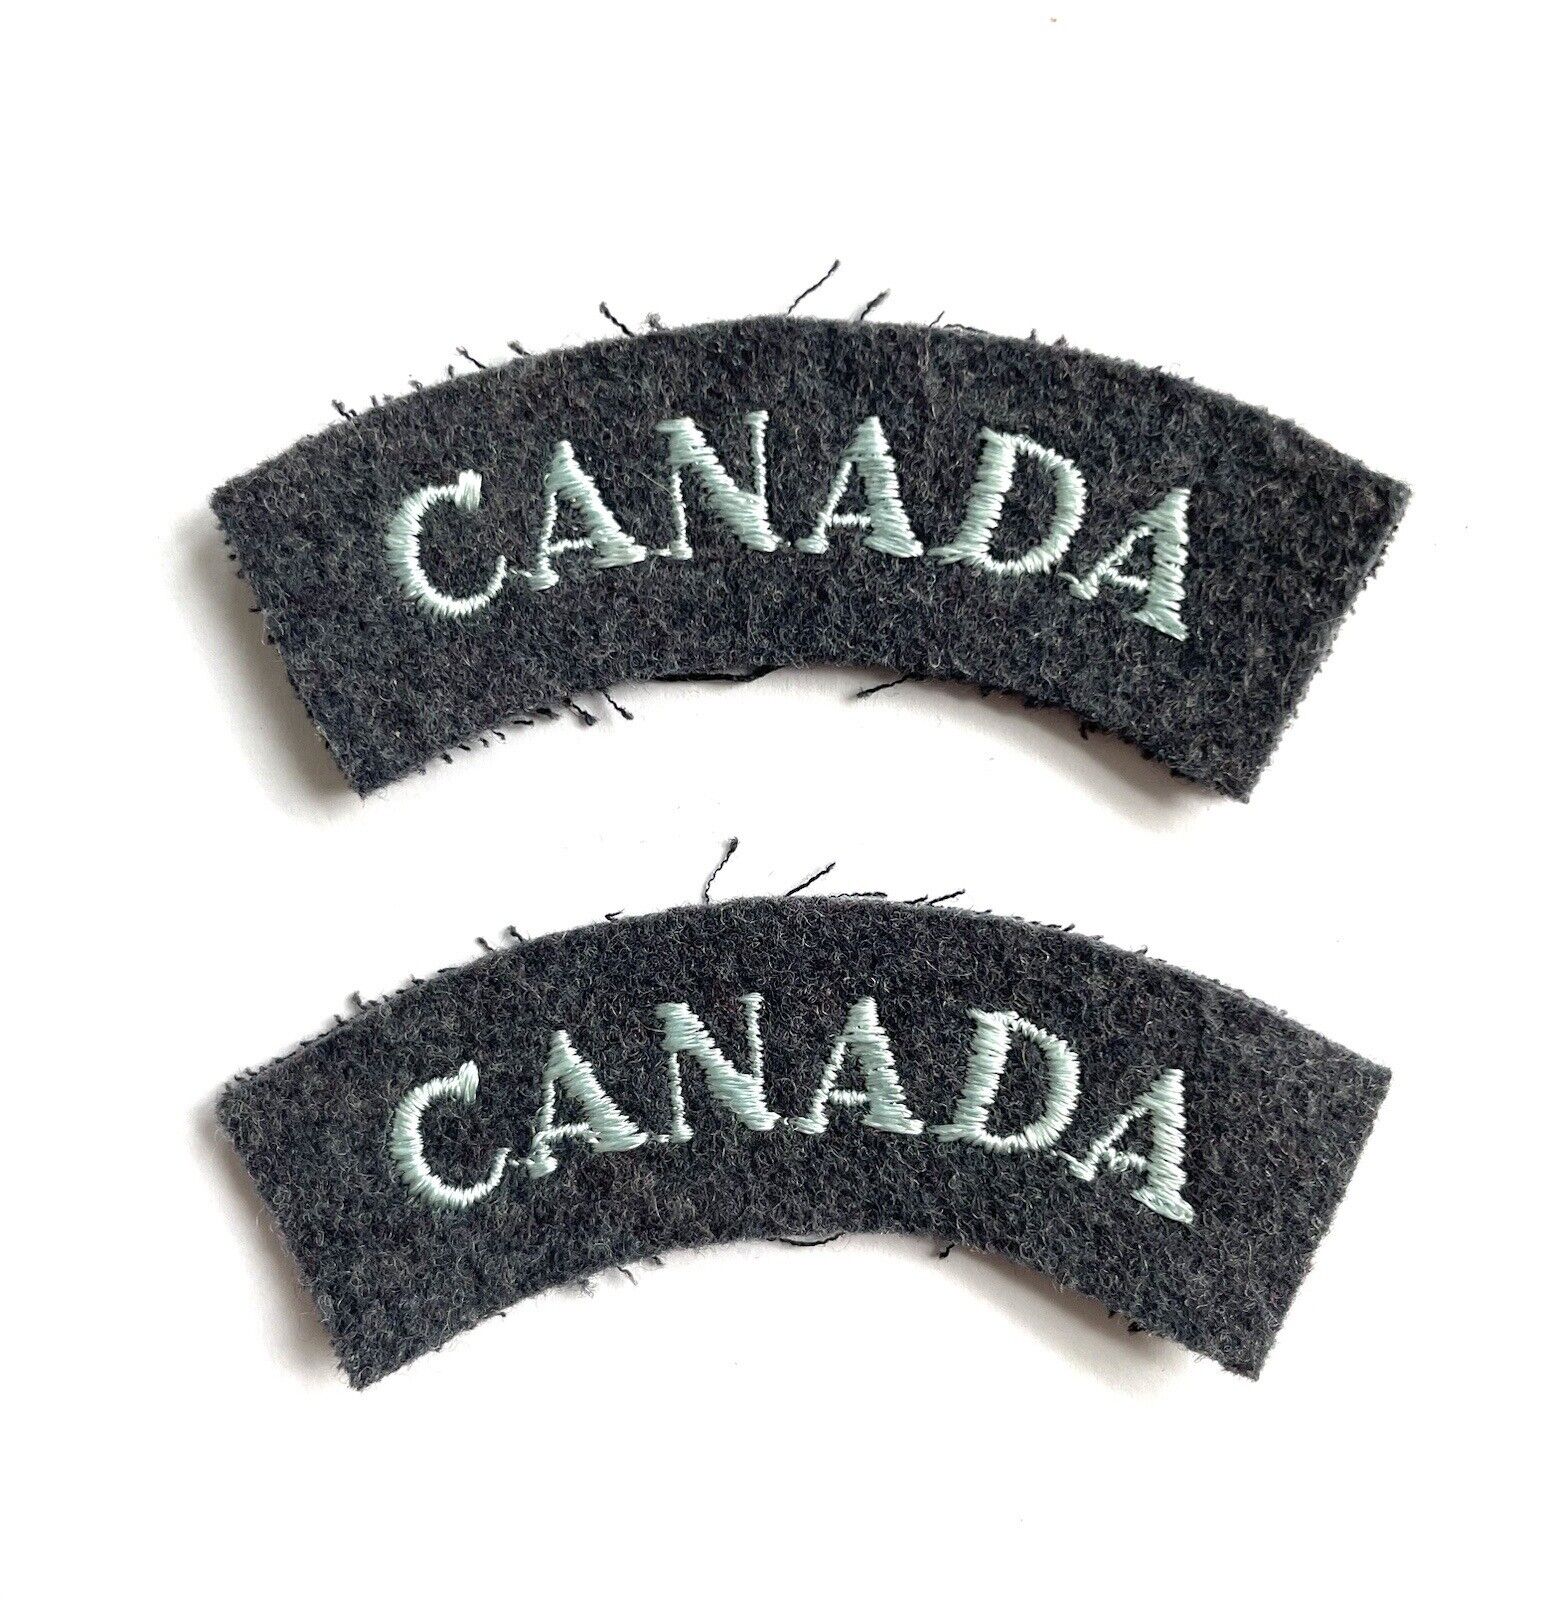 WW2 era RCAF “Canada” Shoulder Title Patch Insignia Pair Matching